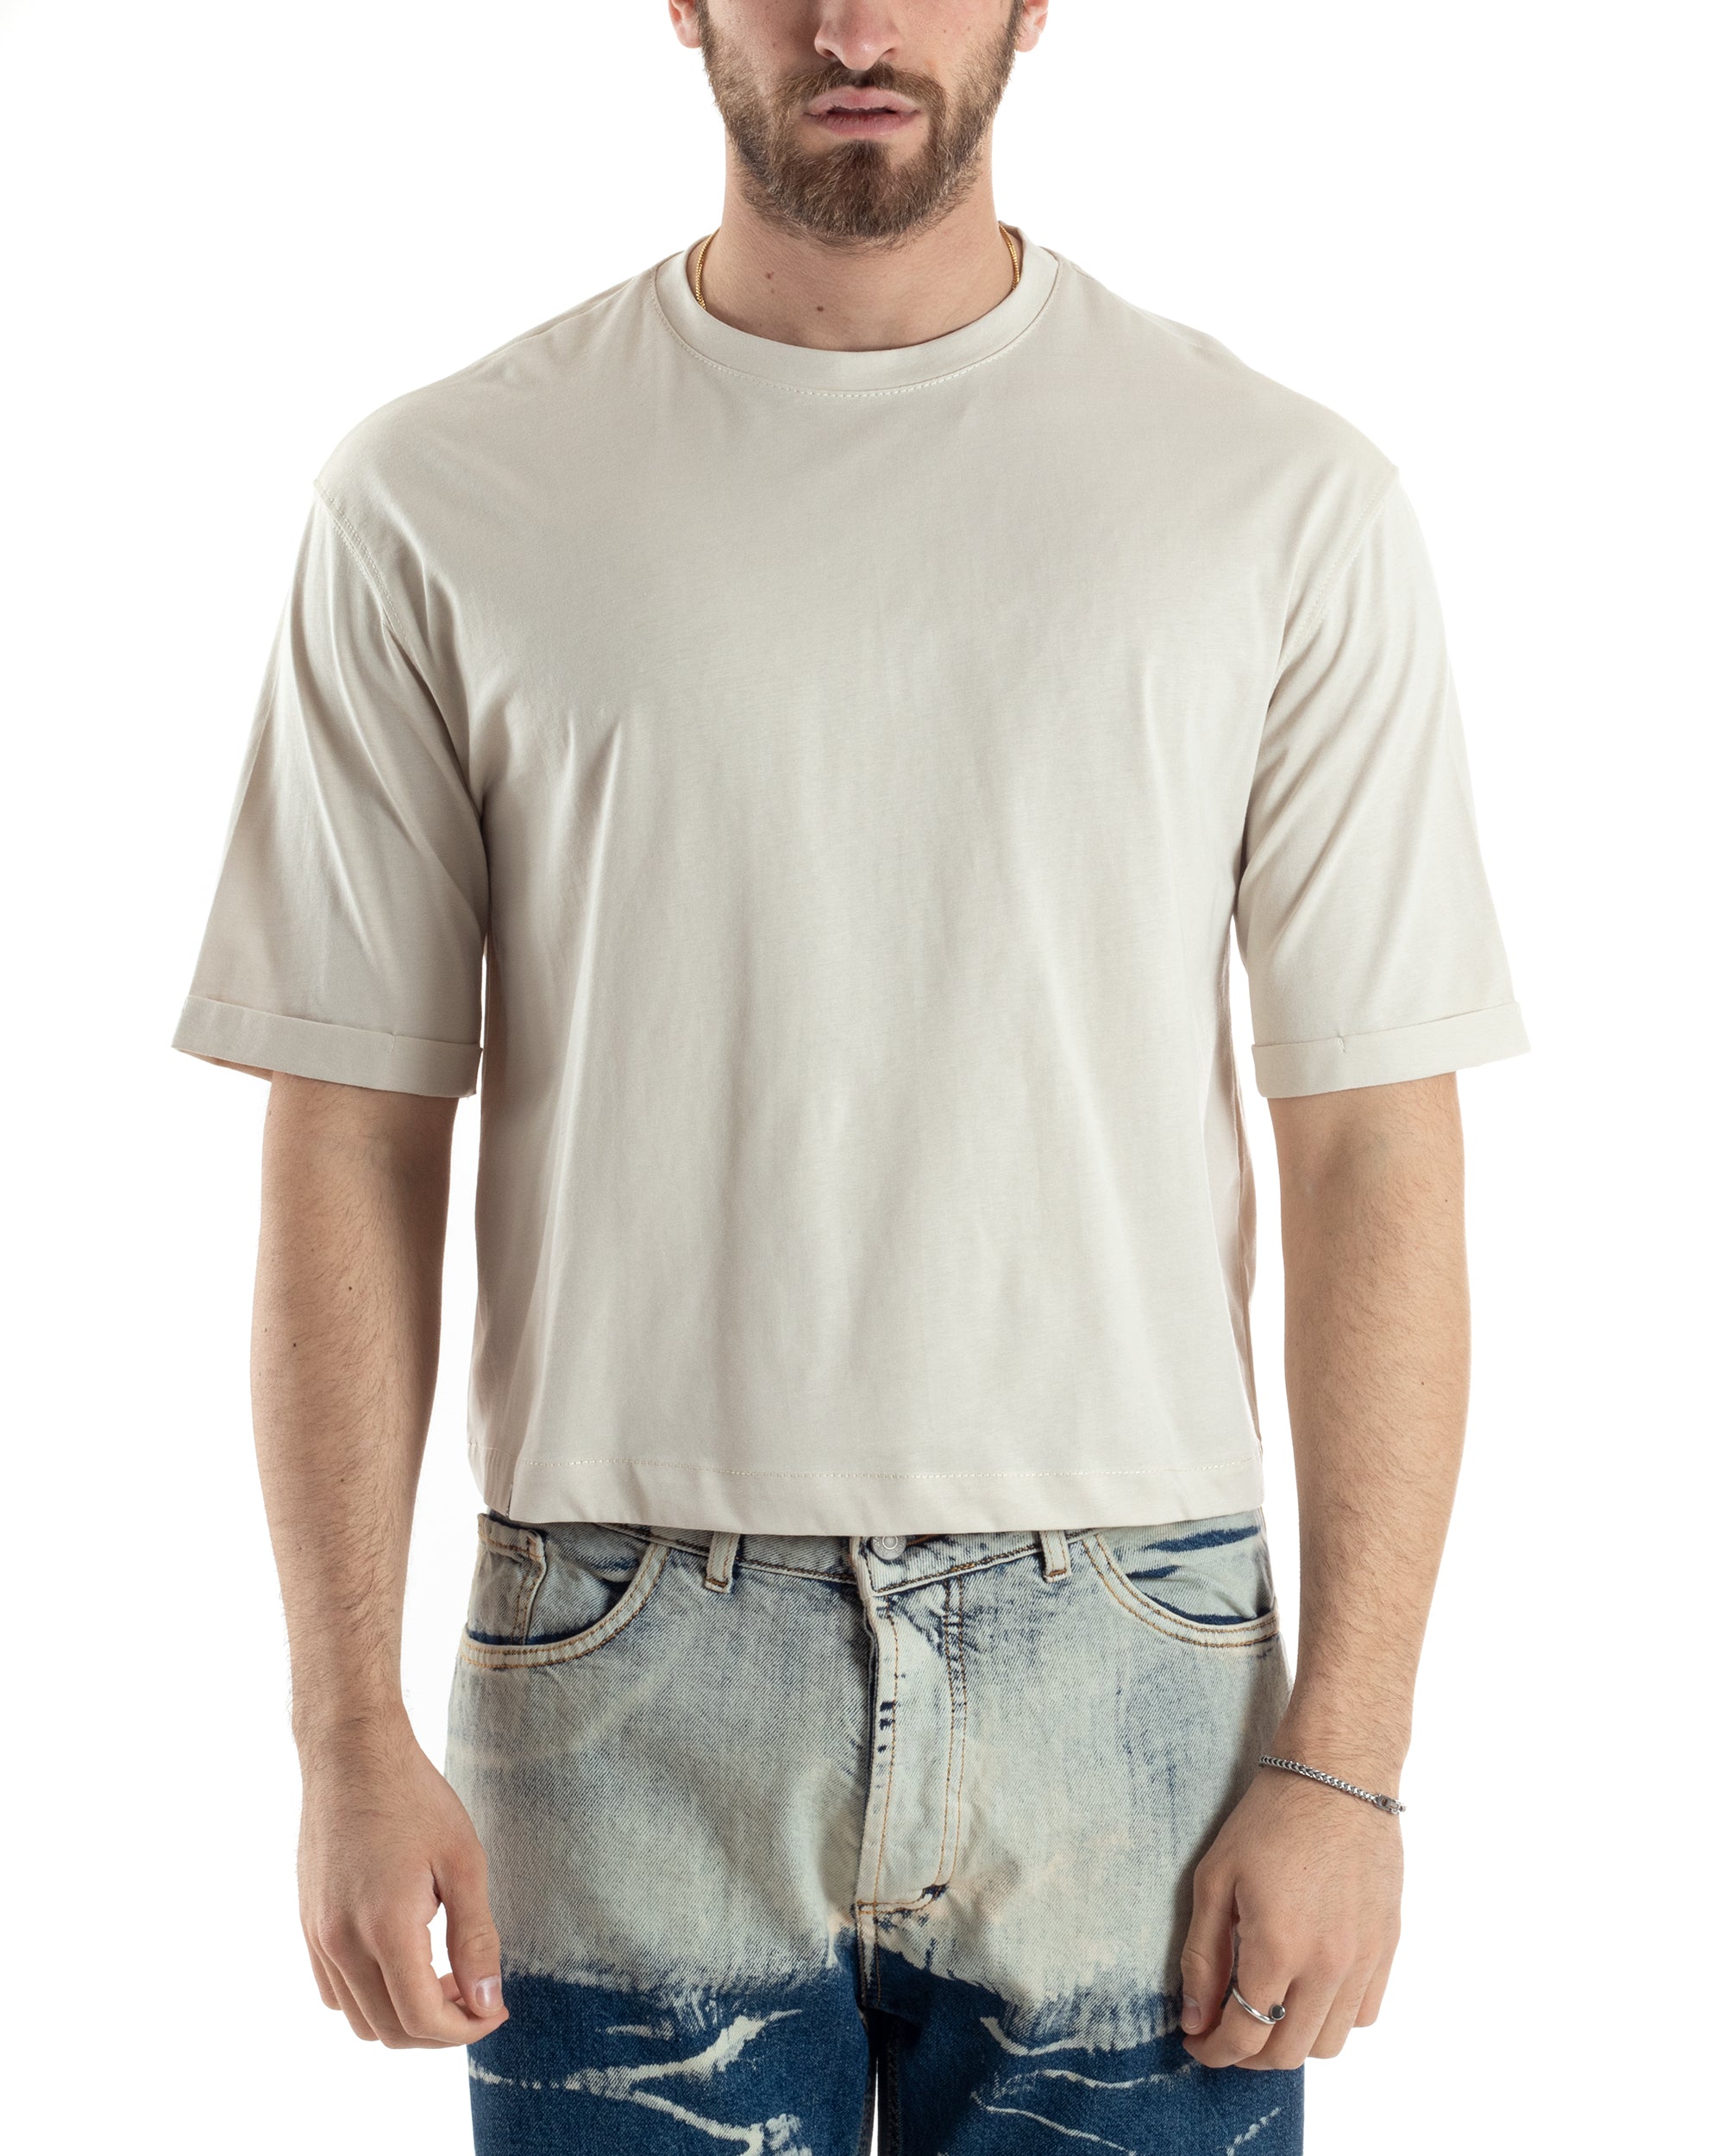 T-shirt Uomo Cropped Corta Boxy Fit Tinta Unita Beige Casual GIOSAL-TS3011A